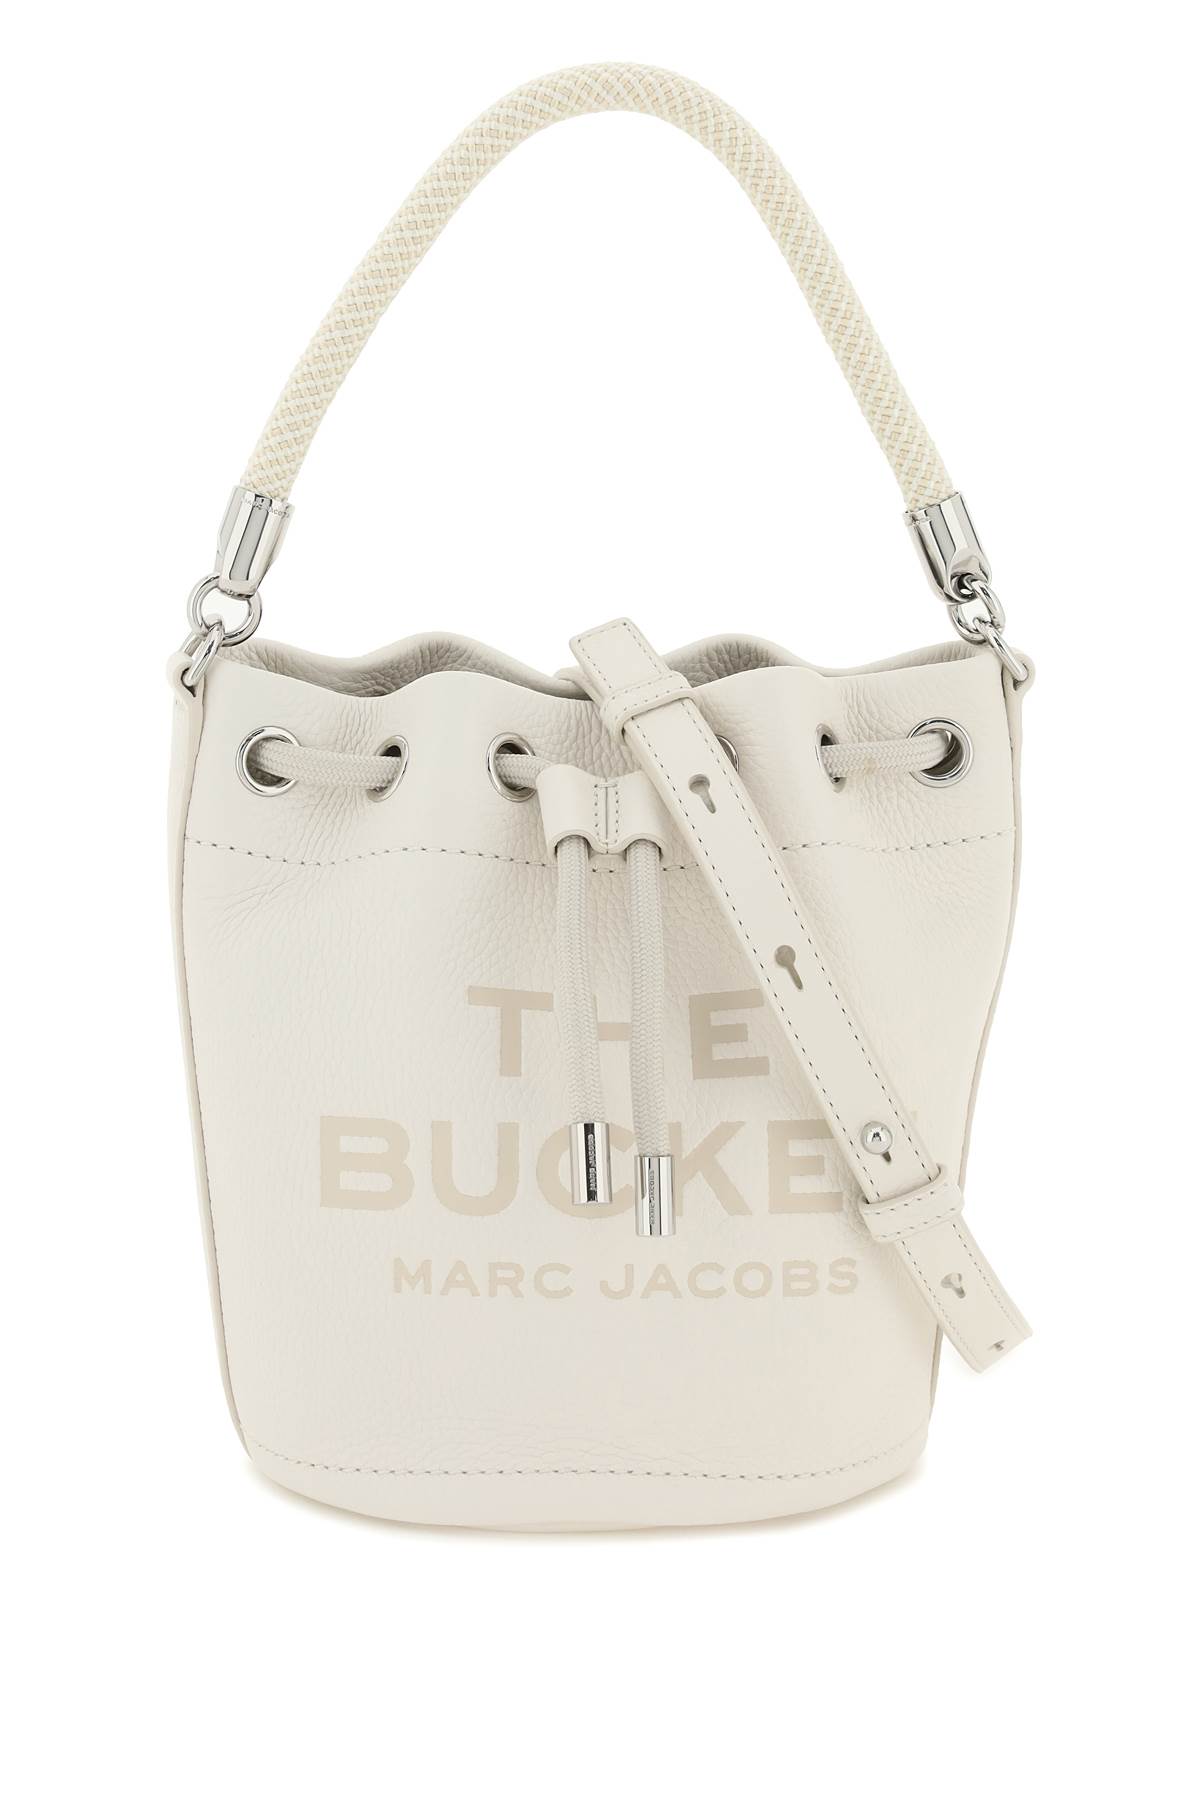 Marc Jacobs The Bucket Bag, Shopbop